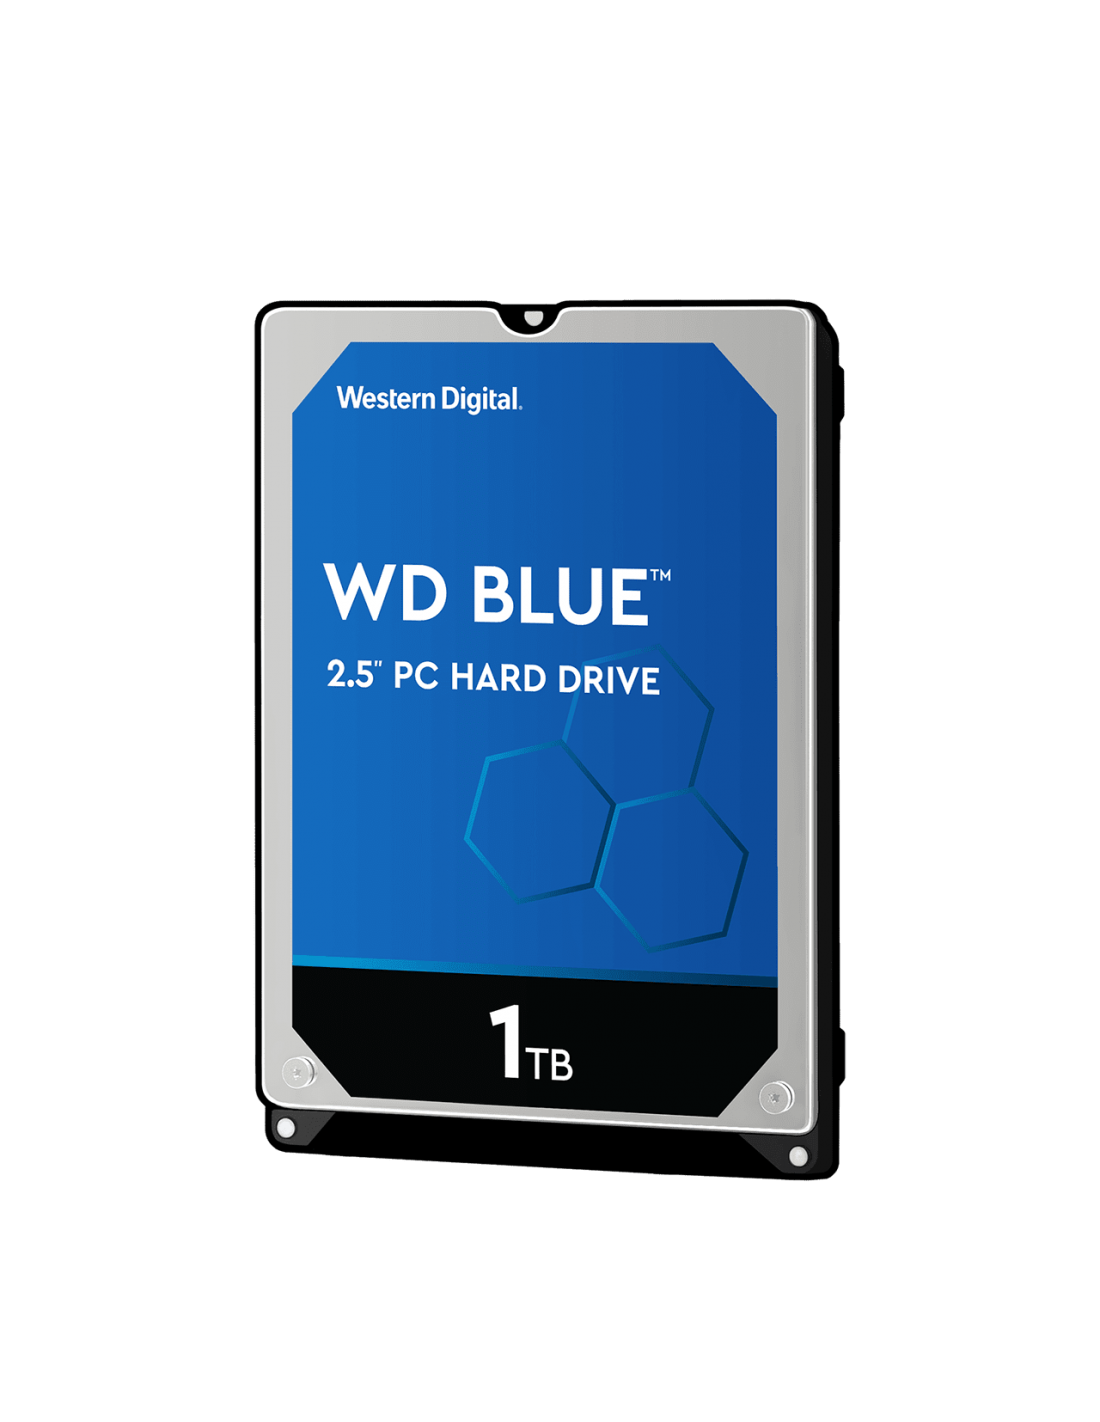 Antemano Romance Preconcepción Western Digital Blue Internal Hard Drive - 2.5 "- 1TB - SATA 3 - 5400 RPM